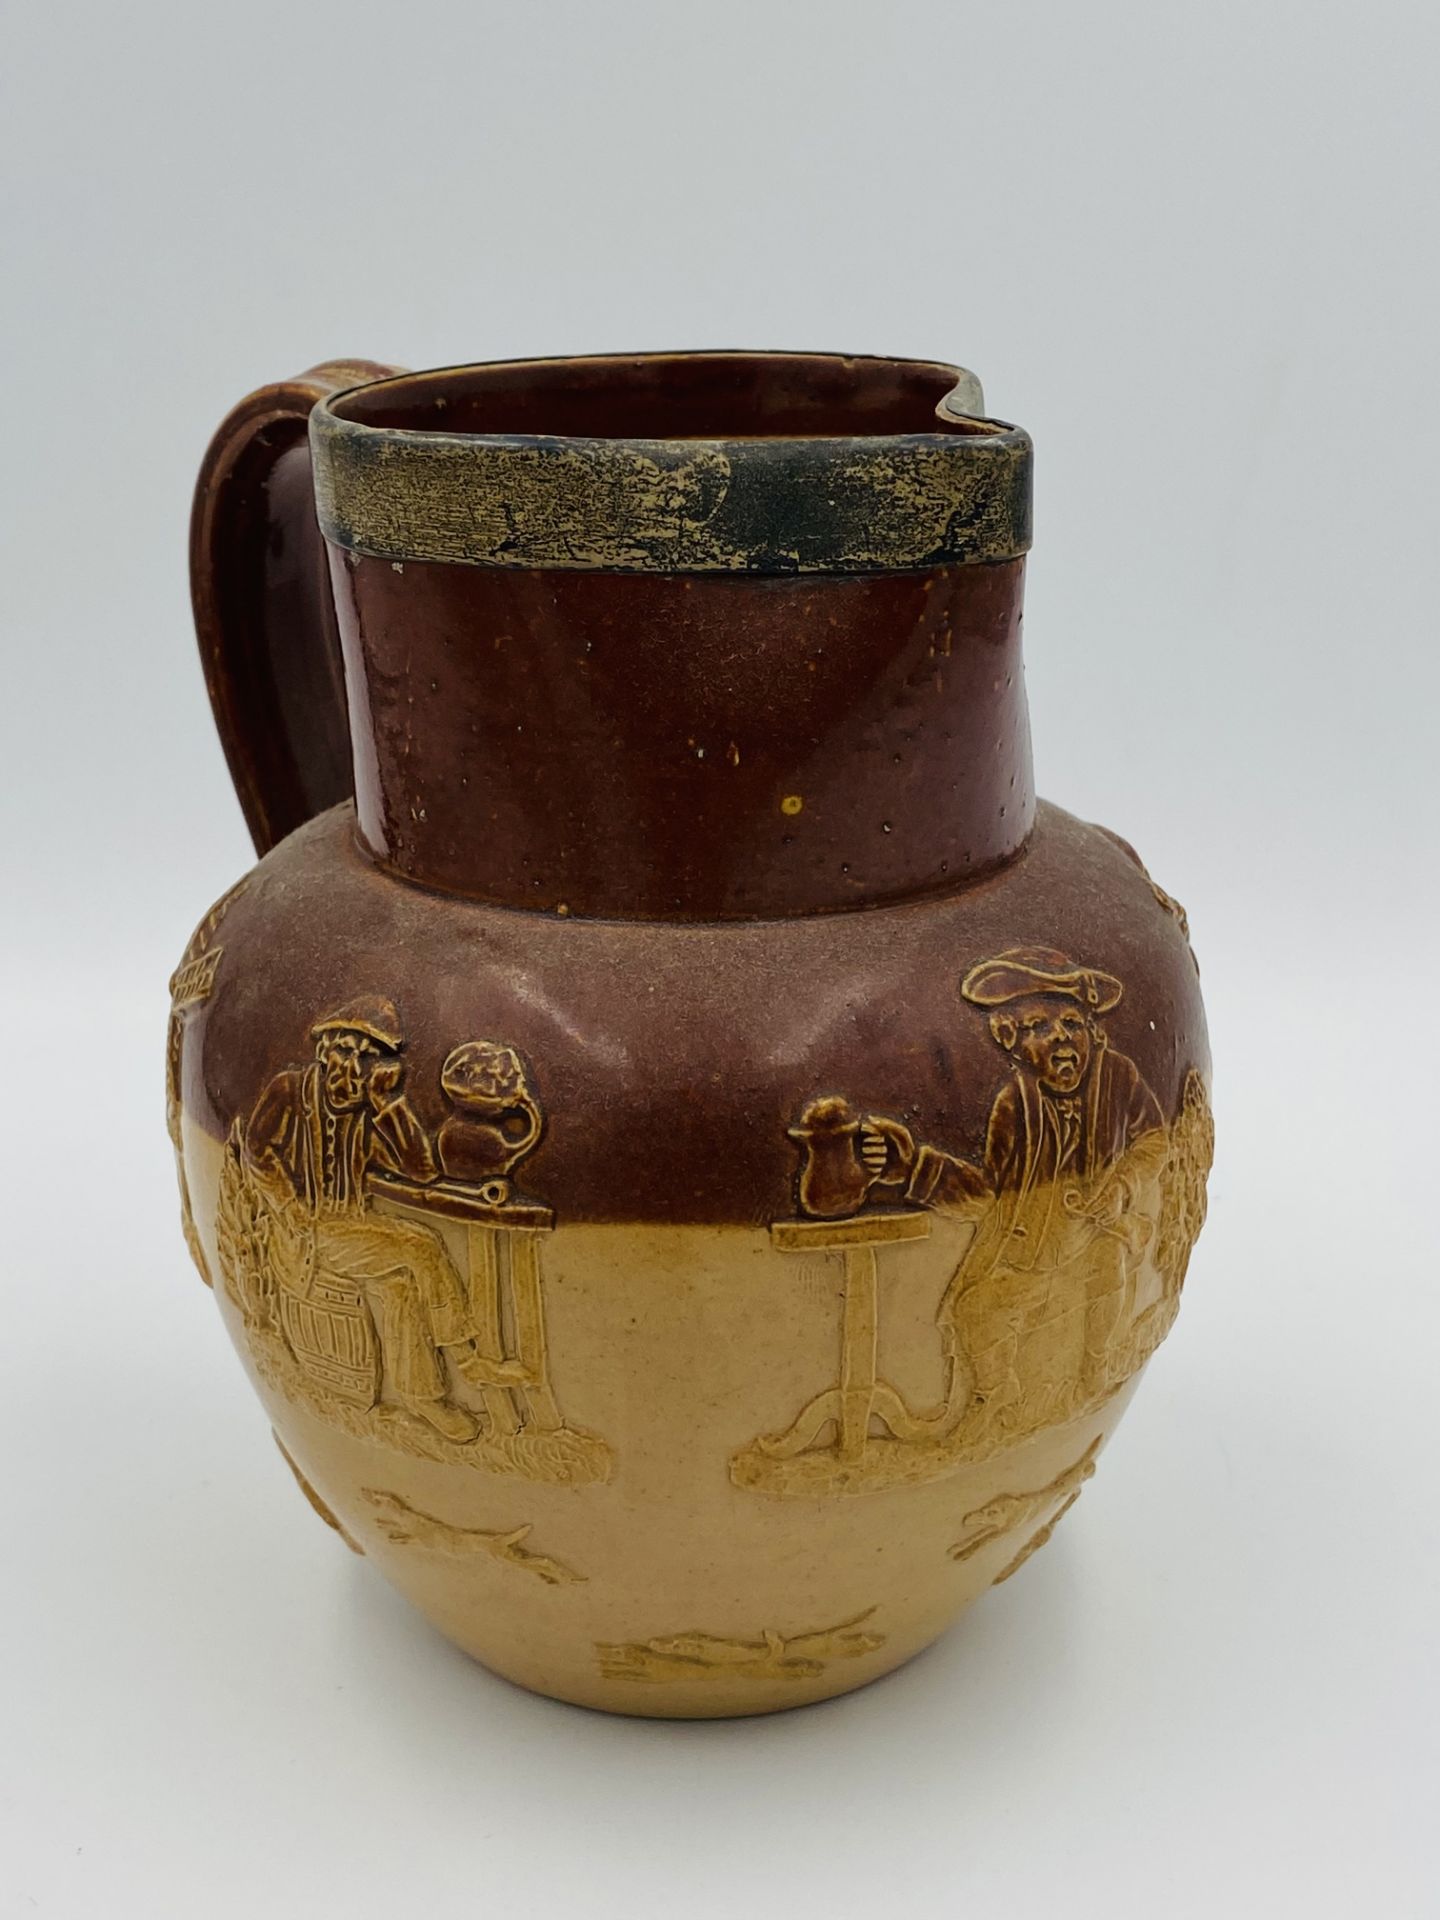 Doulton stoneware jug with silver rim - Image 3 of 3